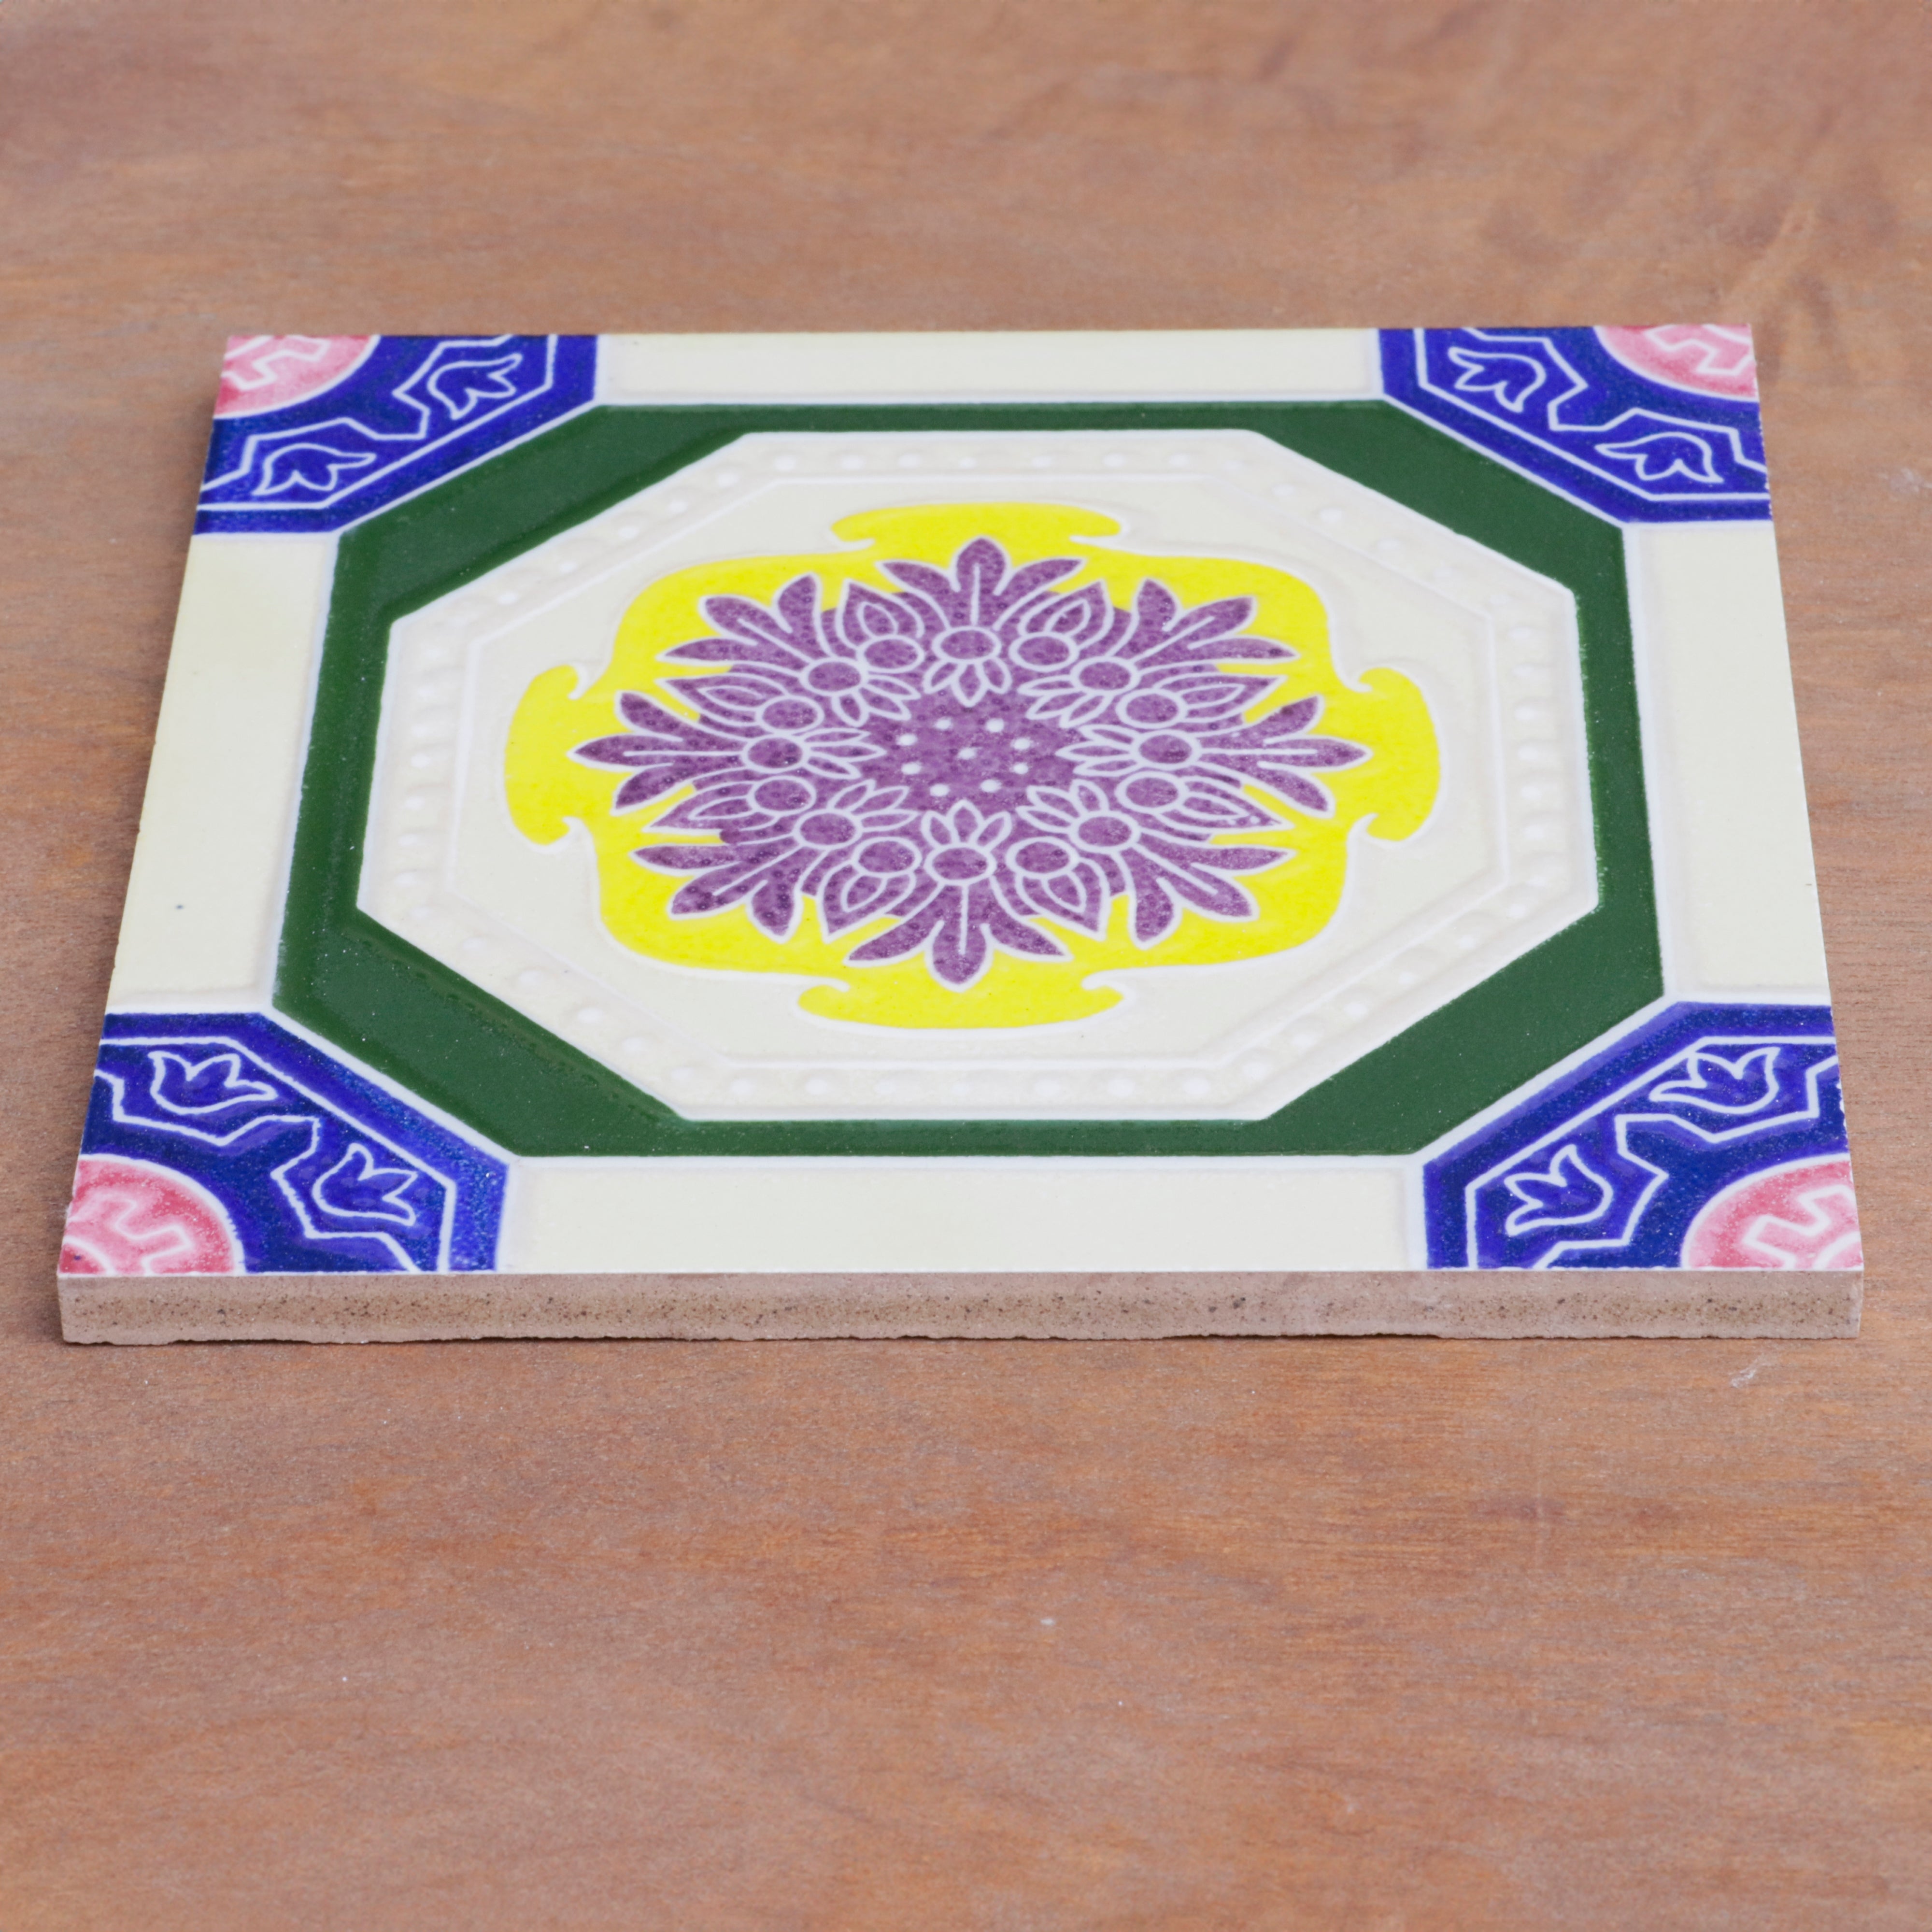 Vintage Aesthetic Flower Designed Ceramic Square Tile Ceramic Tile